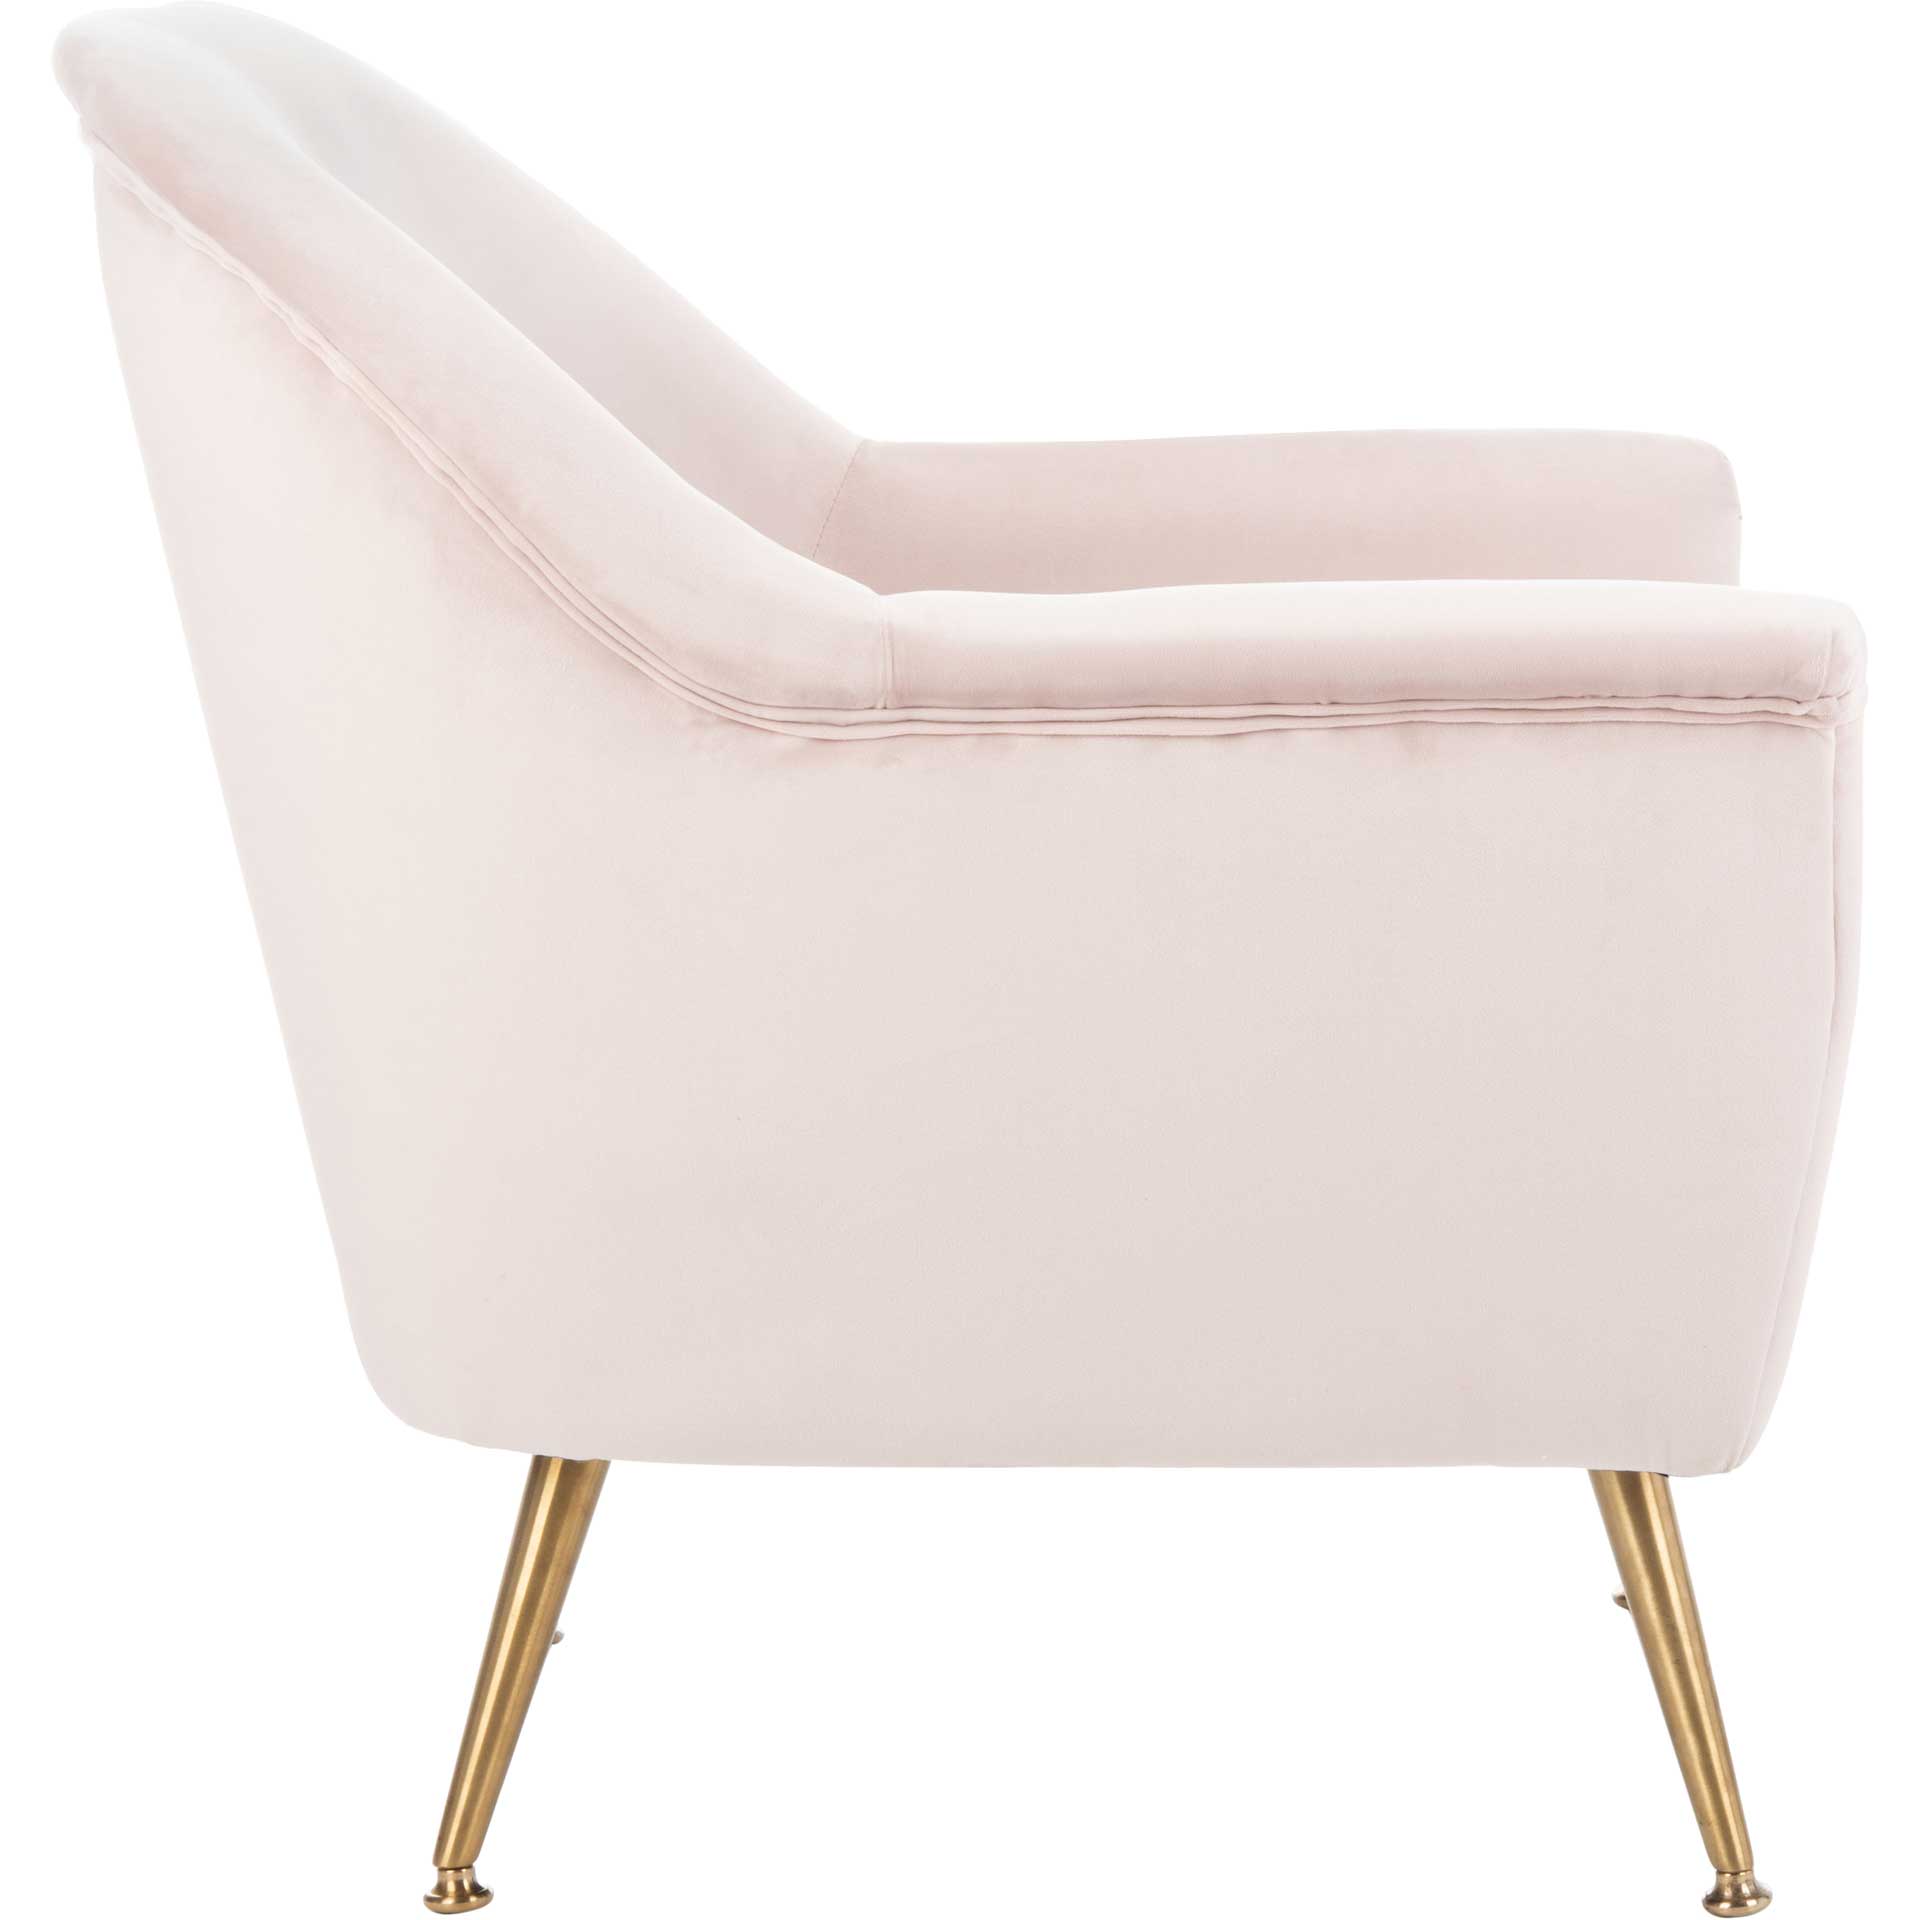 Brendan Mid Century Arm Chair Blush Pink/Brass